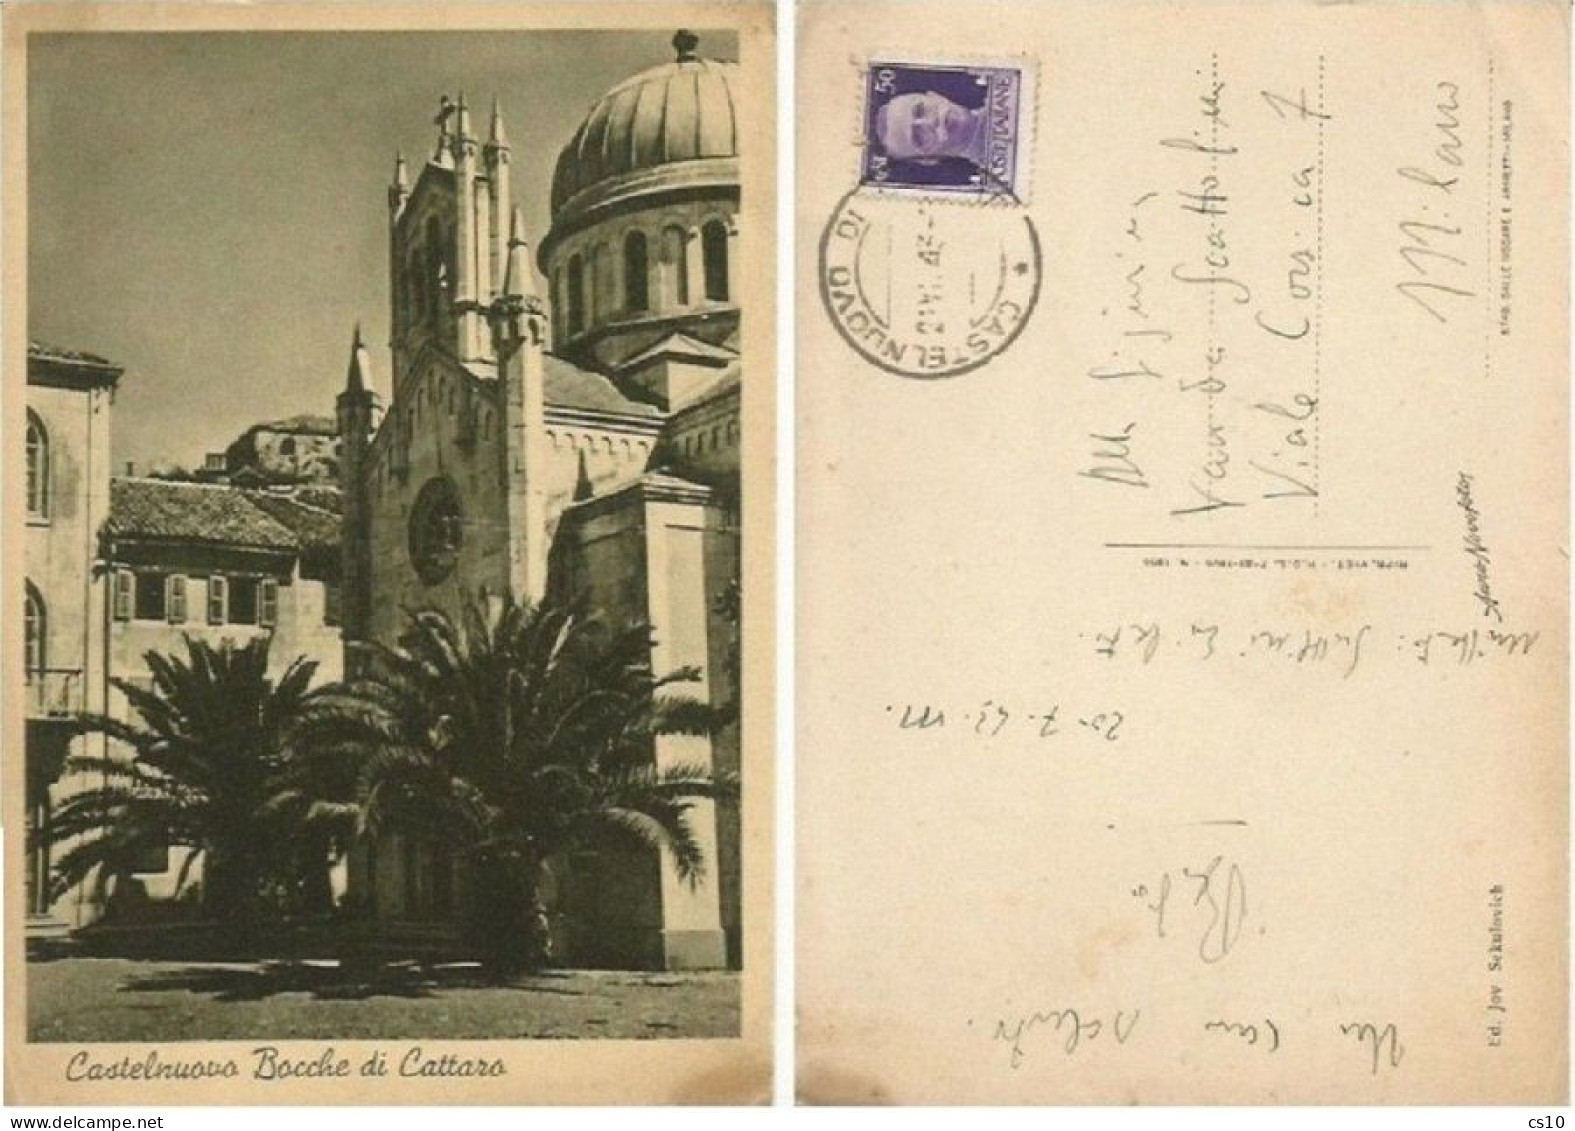 Bocche Cattaro Kotor Montenegro Italy Occ.Era Castelnuovo Cattedrale B/w Pcard 25lug1943 By Civil Mail - Montenegro